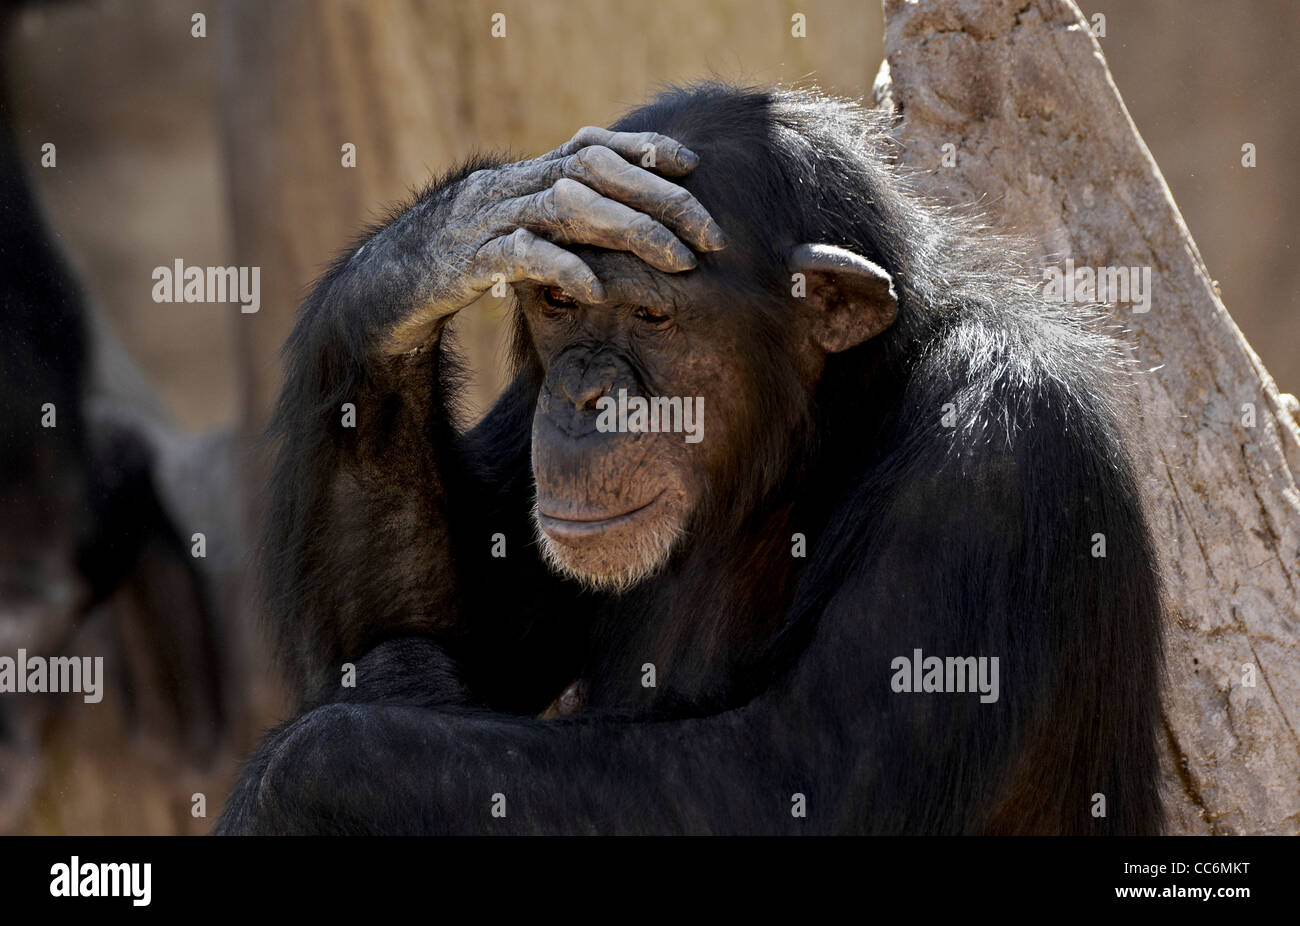 Monkey ,el chimpancé chimpancé, los grandes simios, cautiva Foto de stock